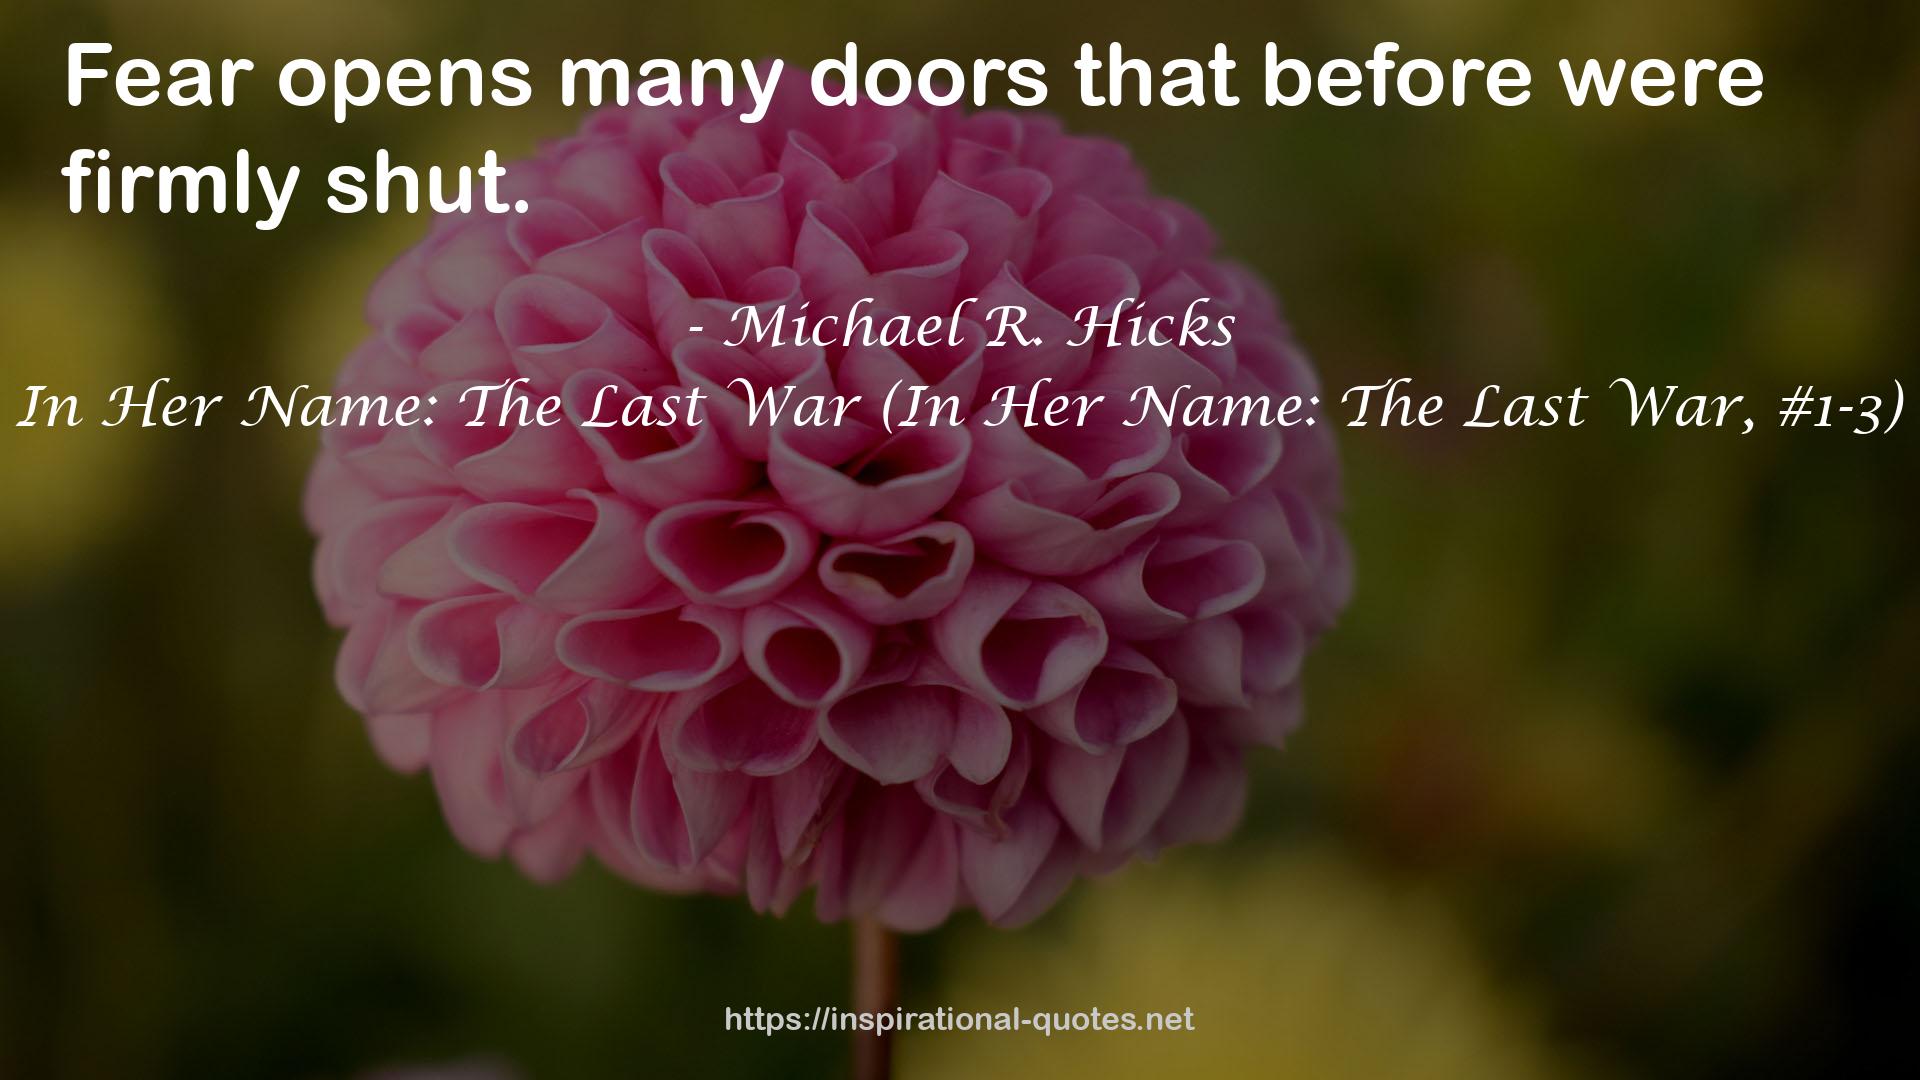 In Her Name: The Last War (In Her Name: The Last War, #1-3) QUOTES